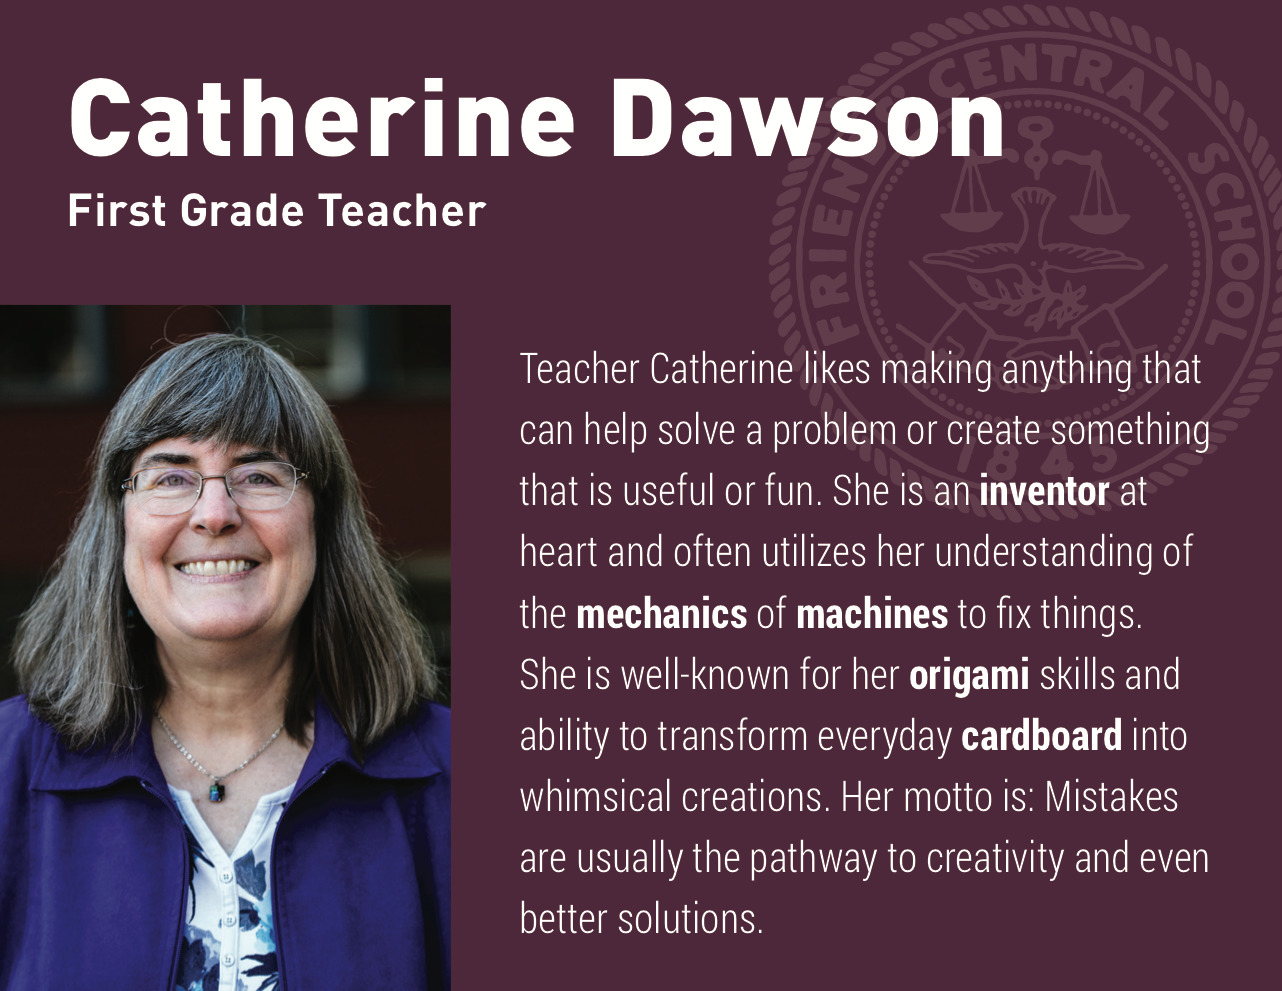 Catherine Dawson's Maker Profile